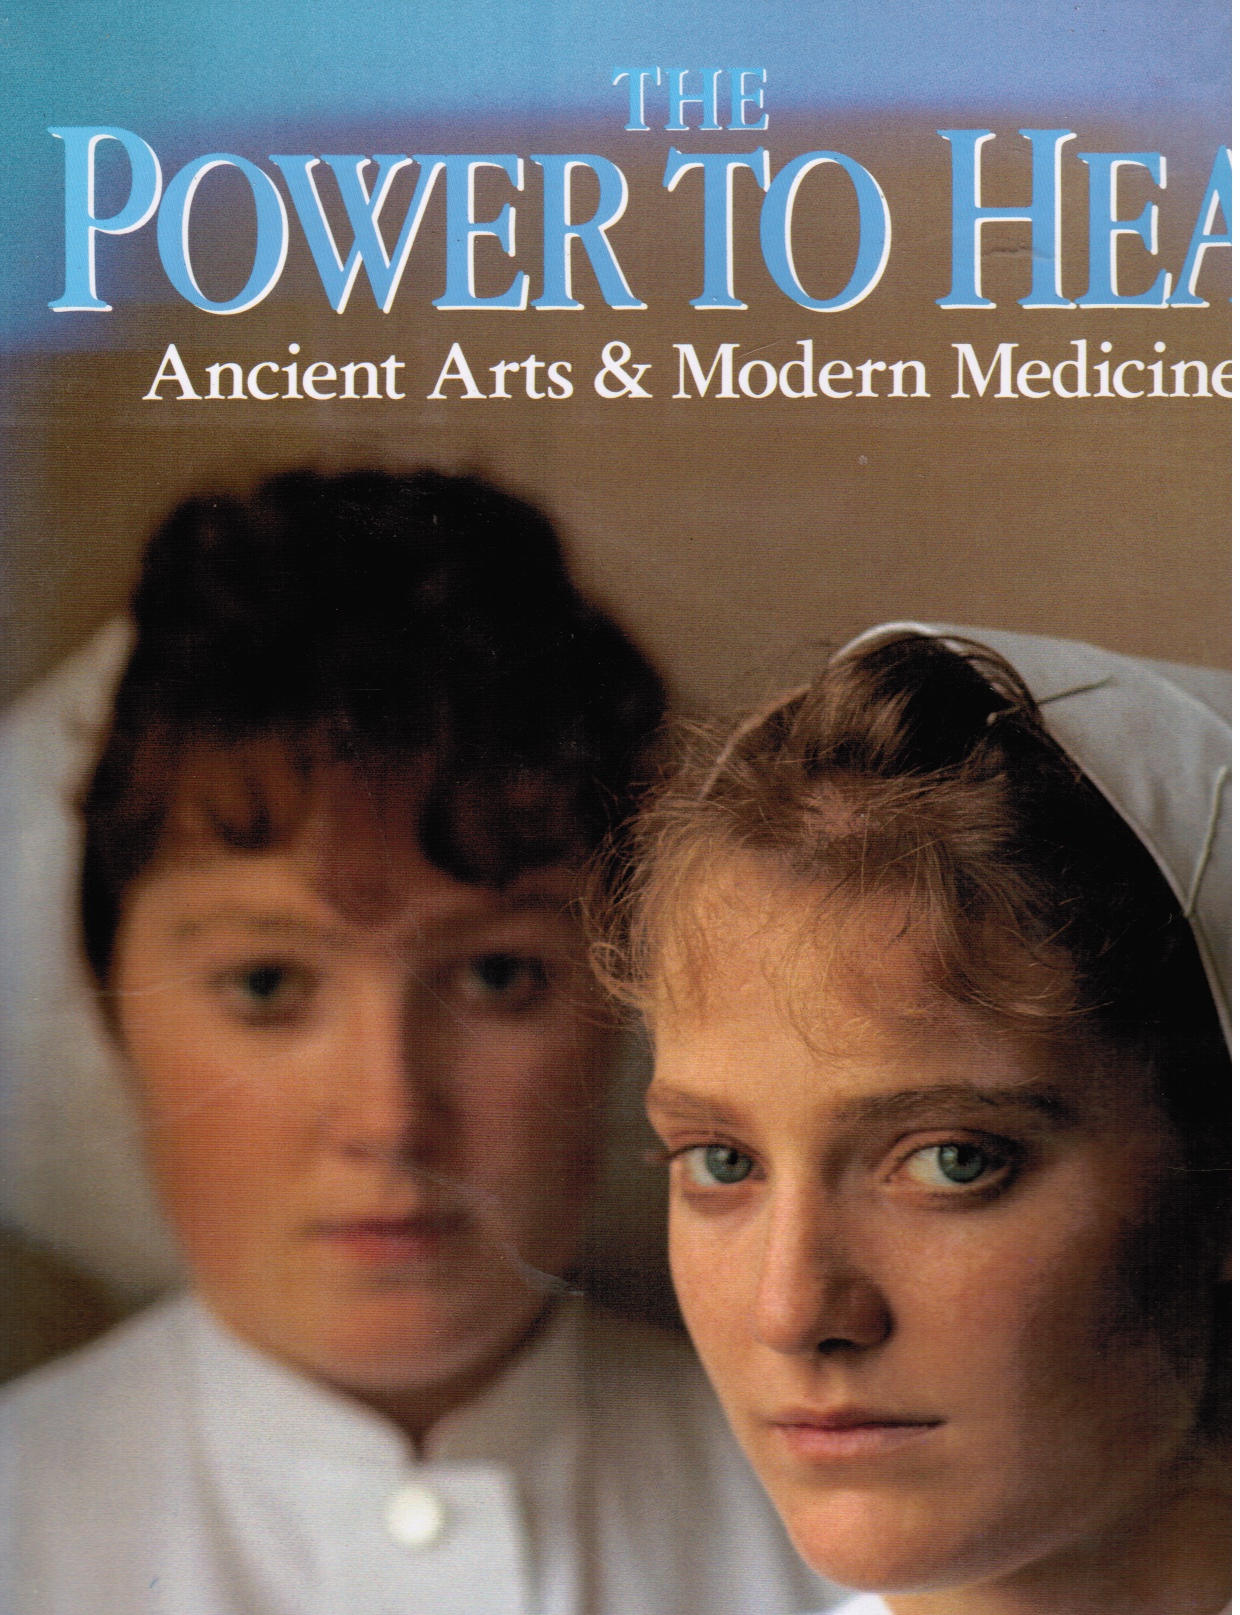 SMOLAN, RICK; MOFFITT, PHILLIP & MATTHEW NAYTHONS - The Power to Heal - Ancient Arts & Modern Medicine